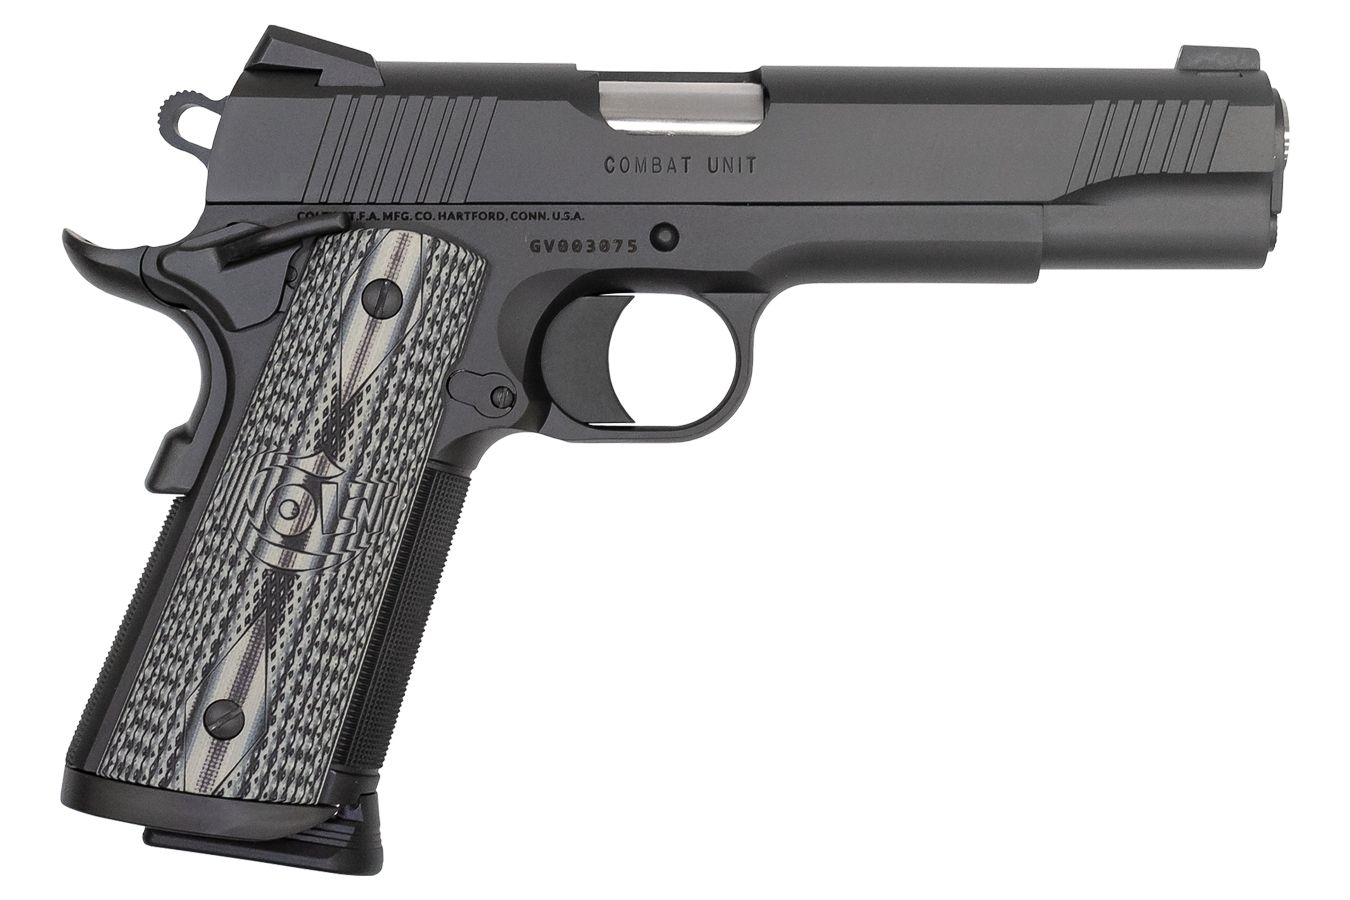 CLT CCUG 45ACP 5'' BLK/GRY 8RD - Handguns